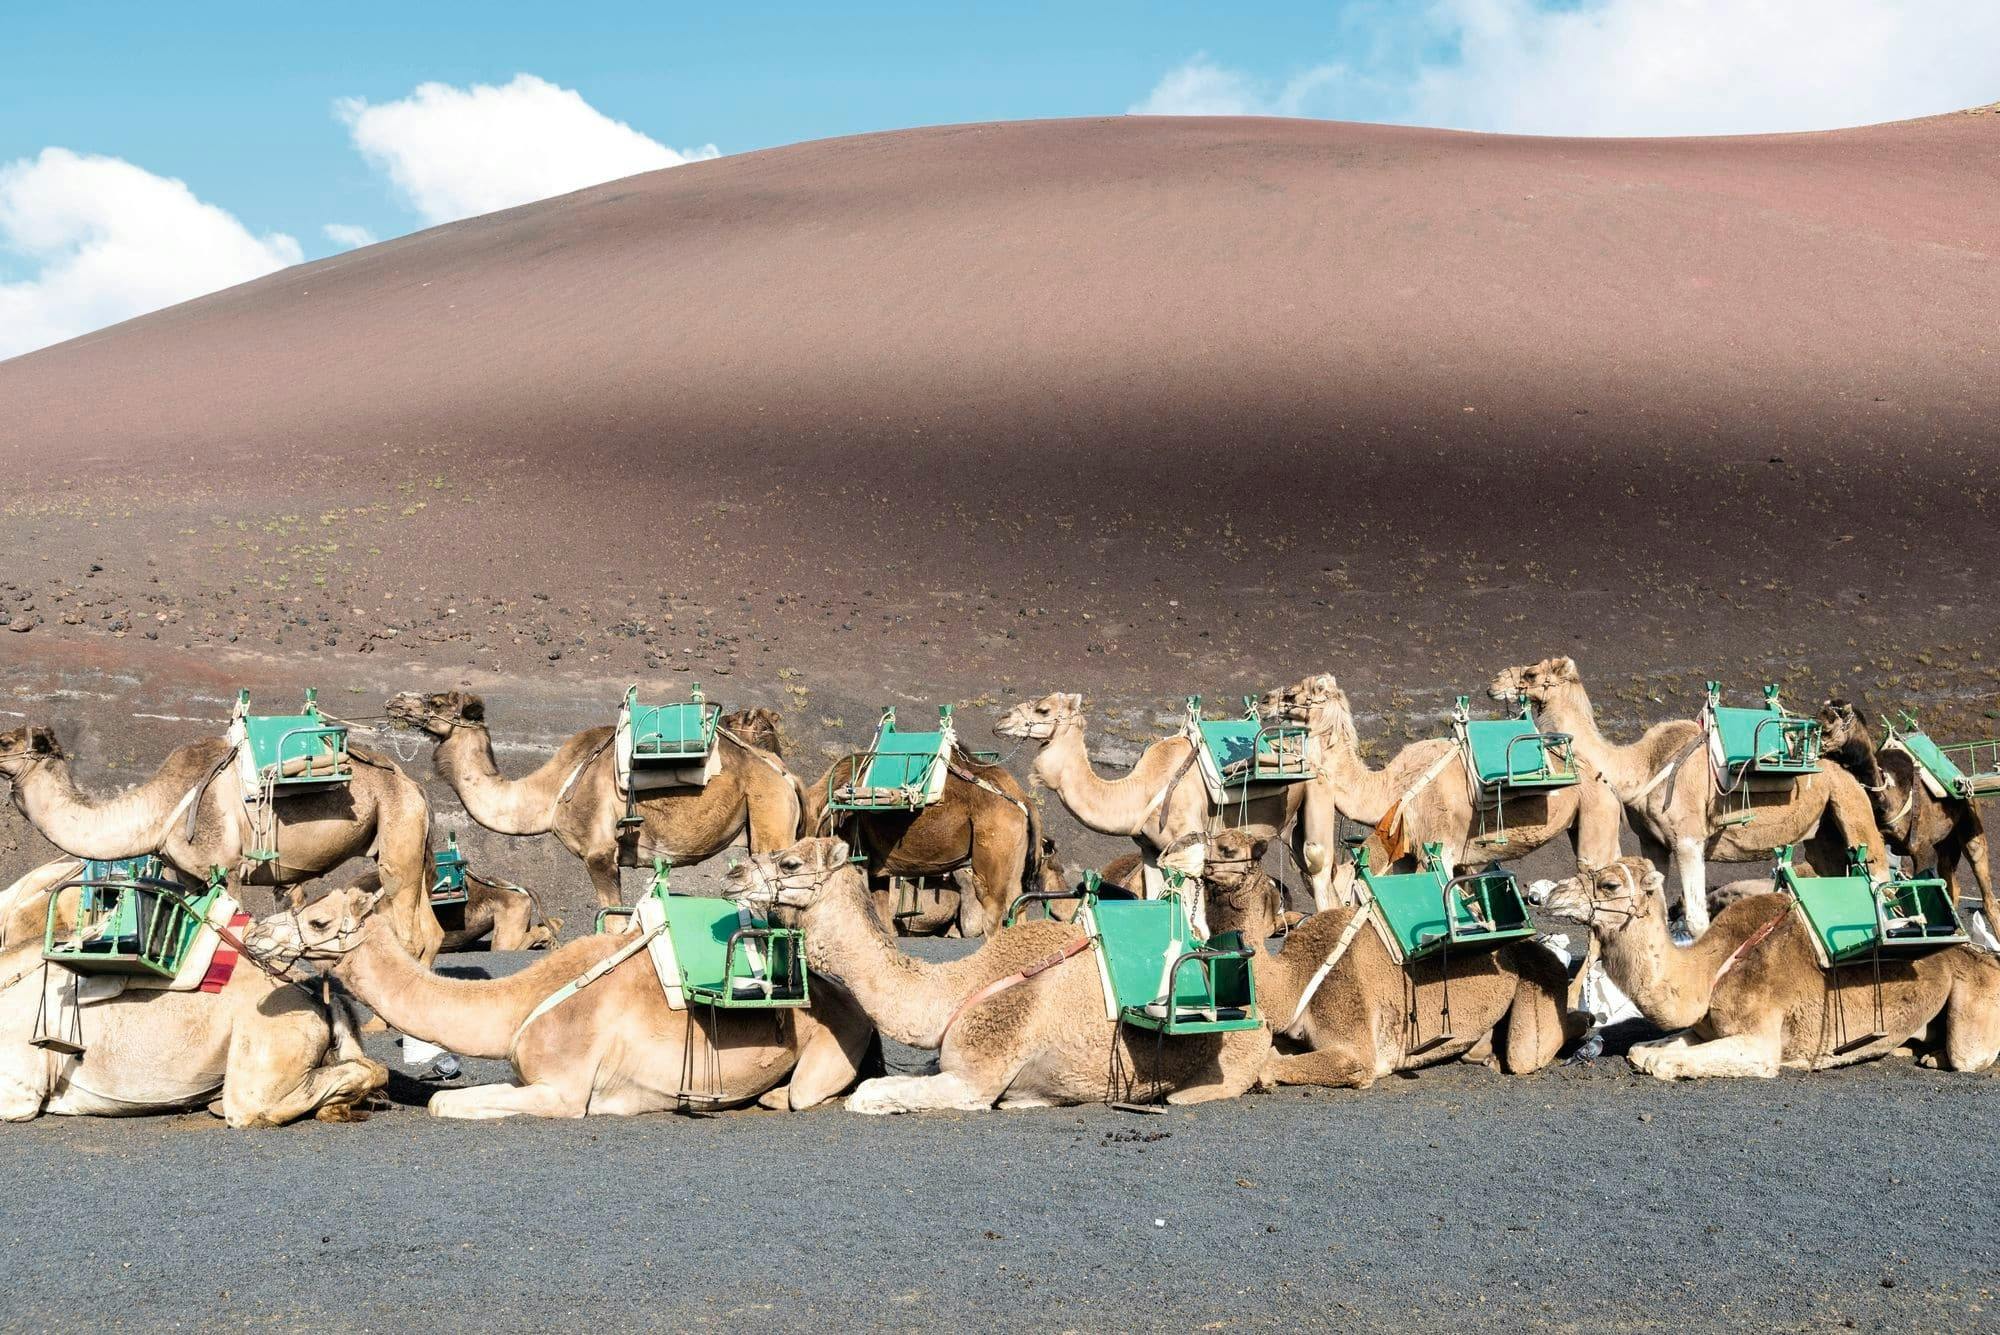 Camel Ride and Minivan Tour at Timanfaya National Park